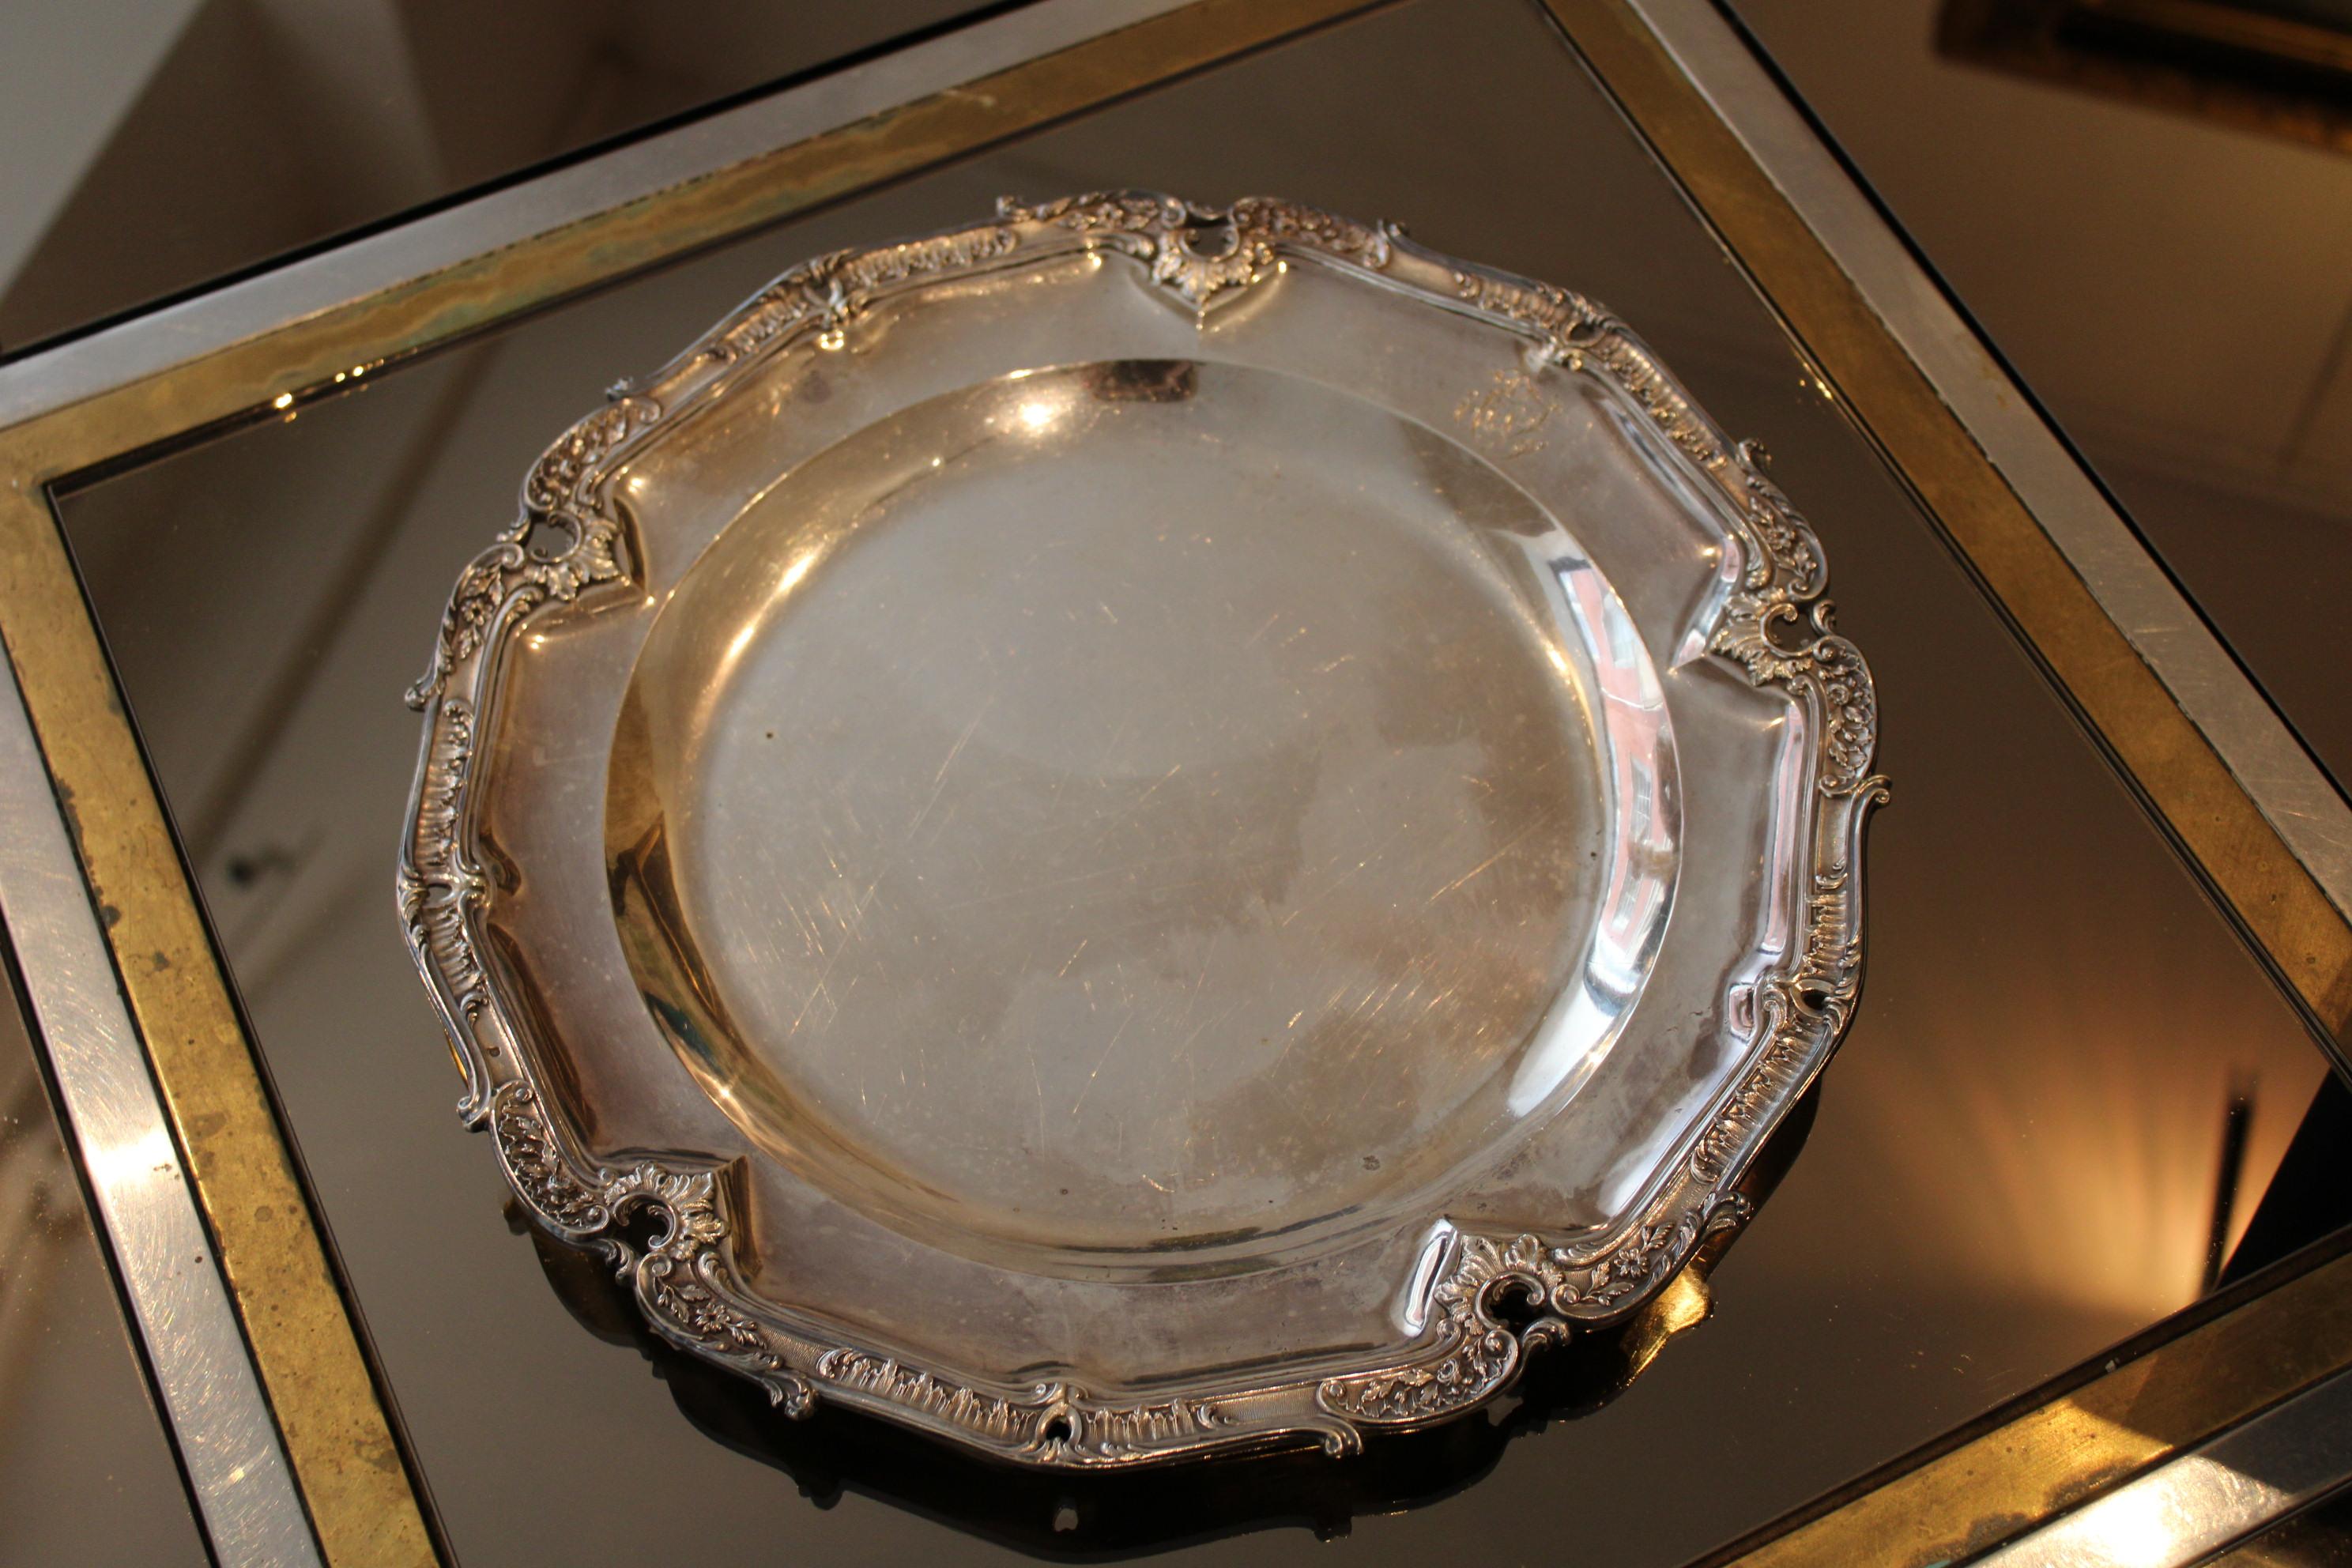 Solid silver tray, 19th century.
Hallmark Minerva.

Weight : 847g